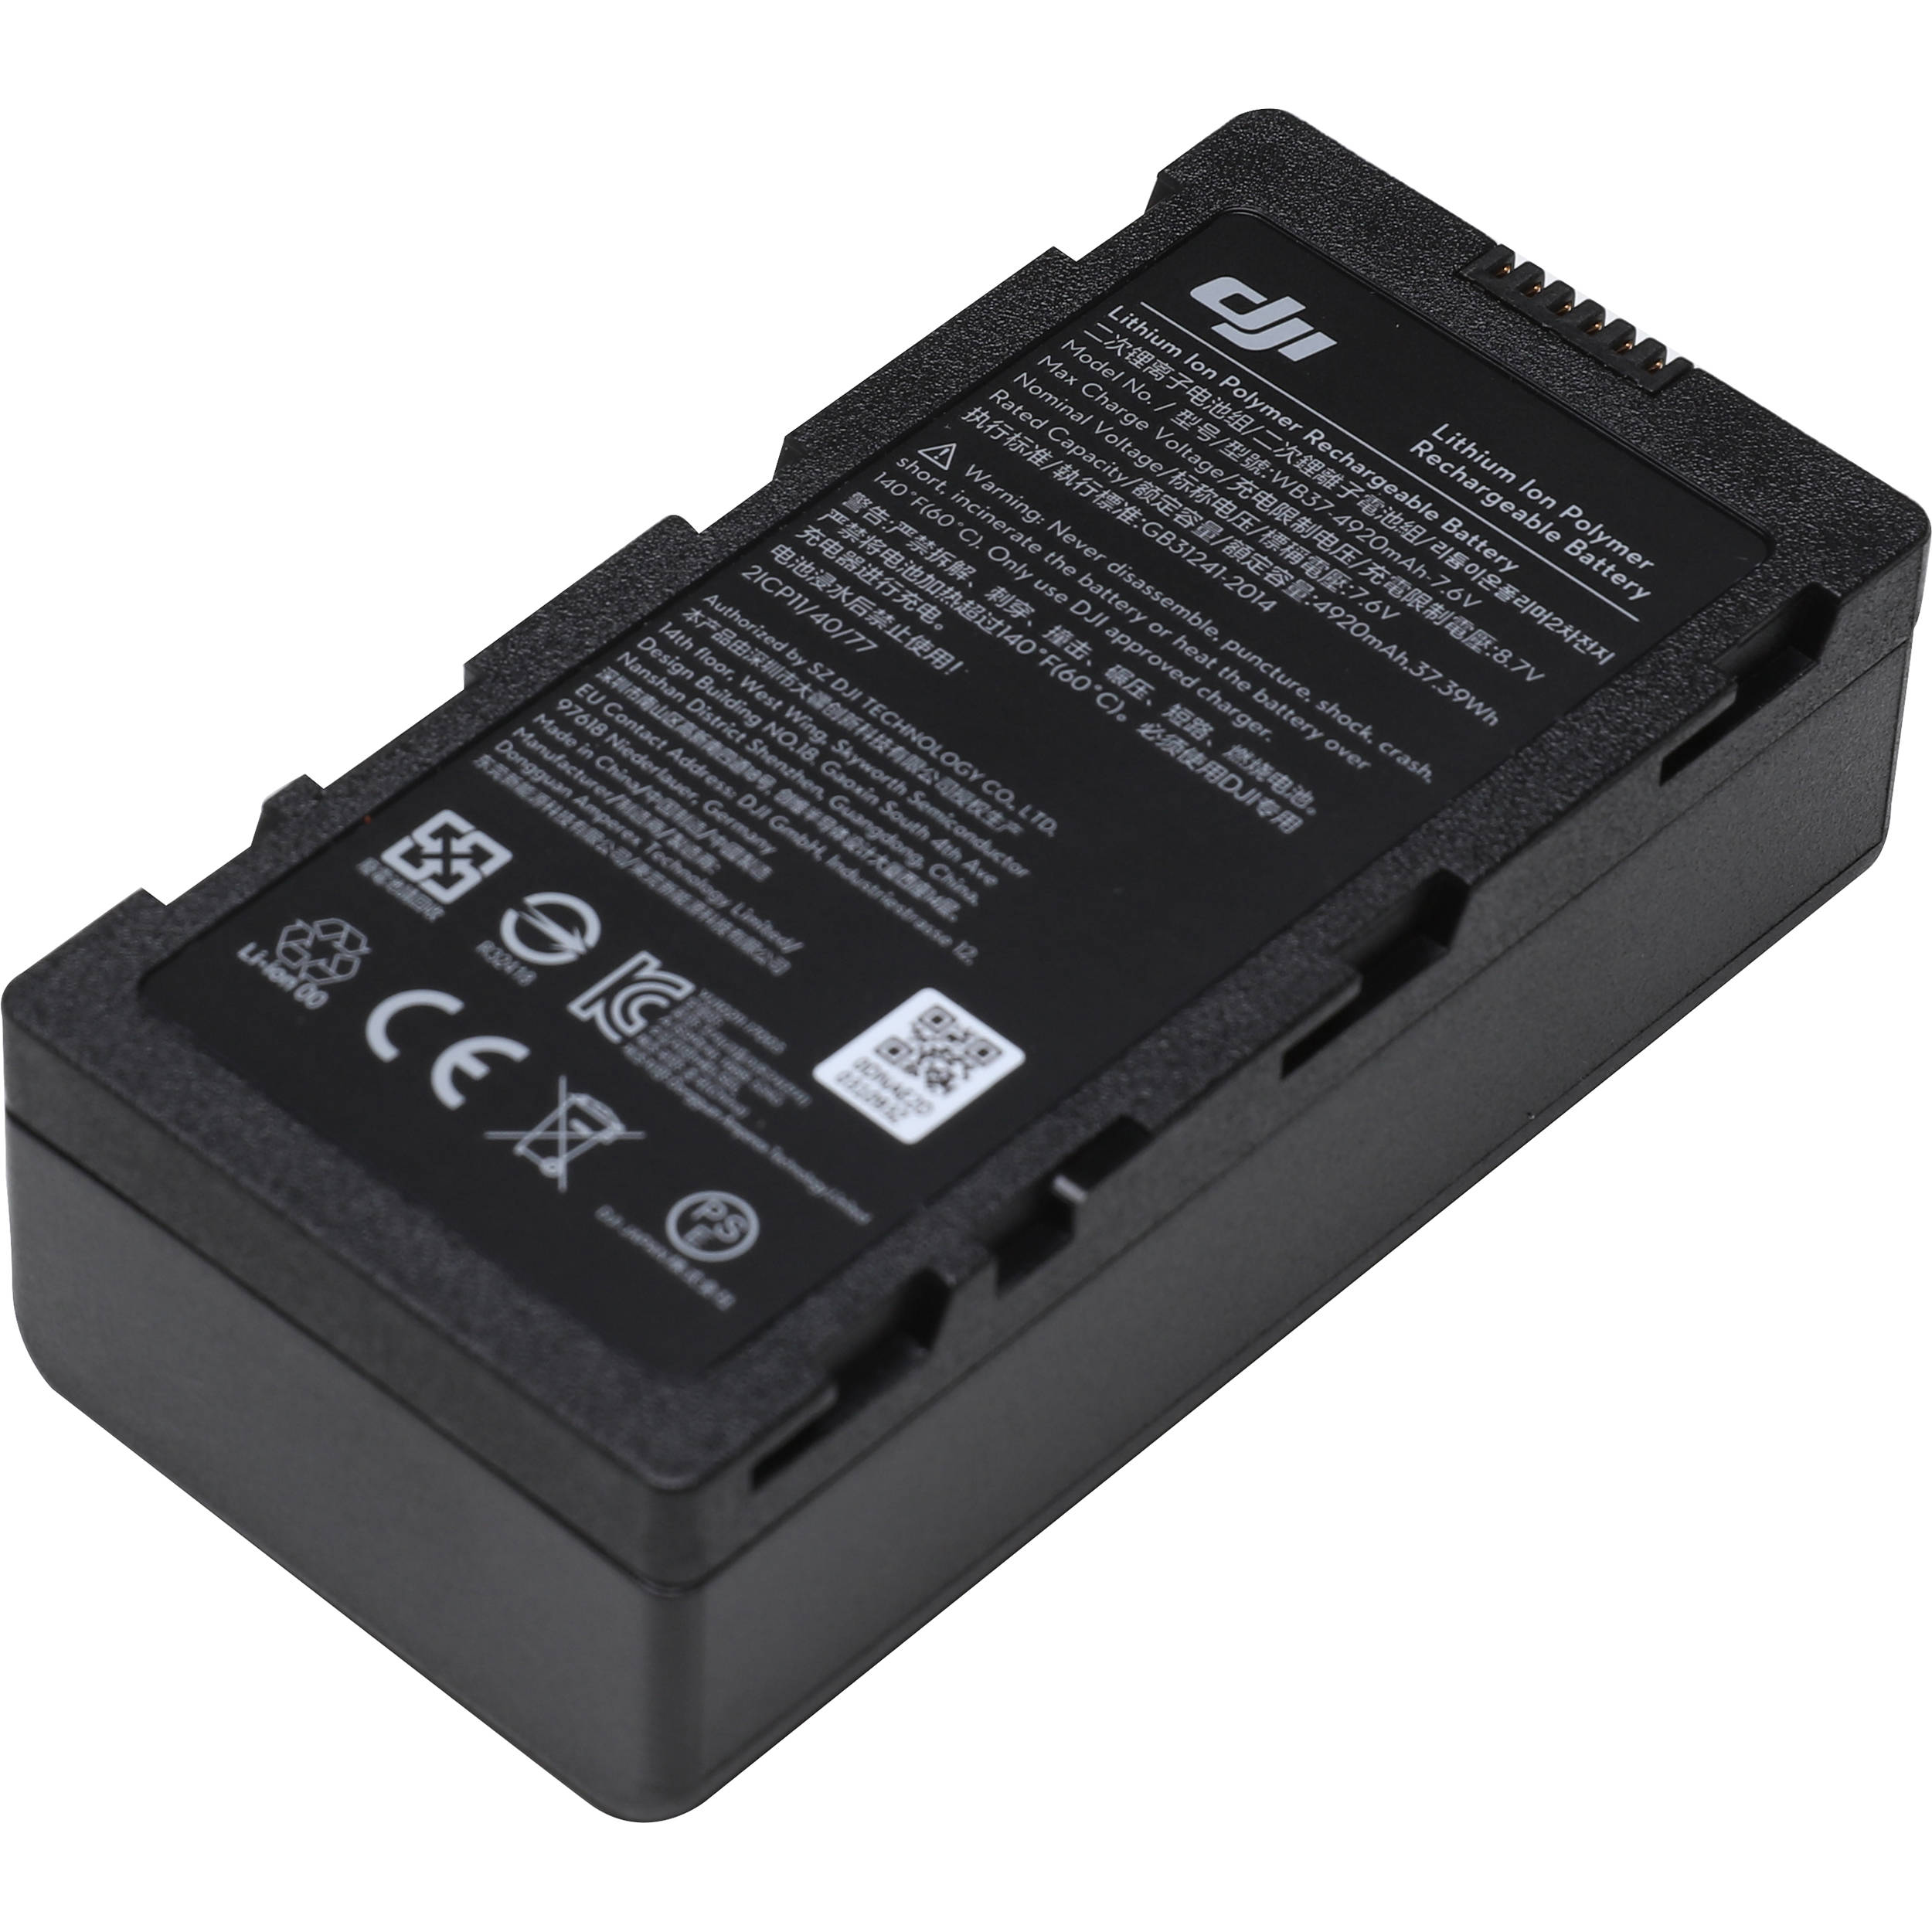 DJI LiPo Battery Pack for DJI CrystalSky & Cendence